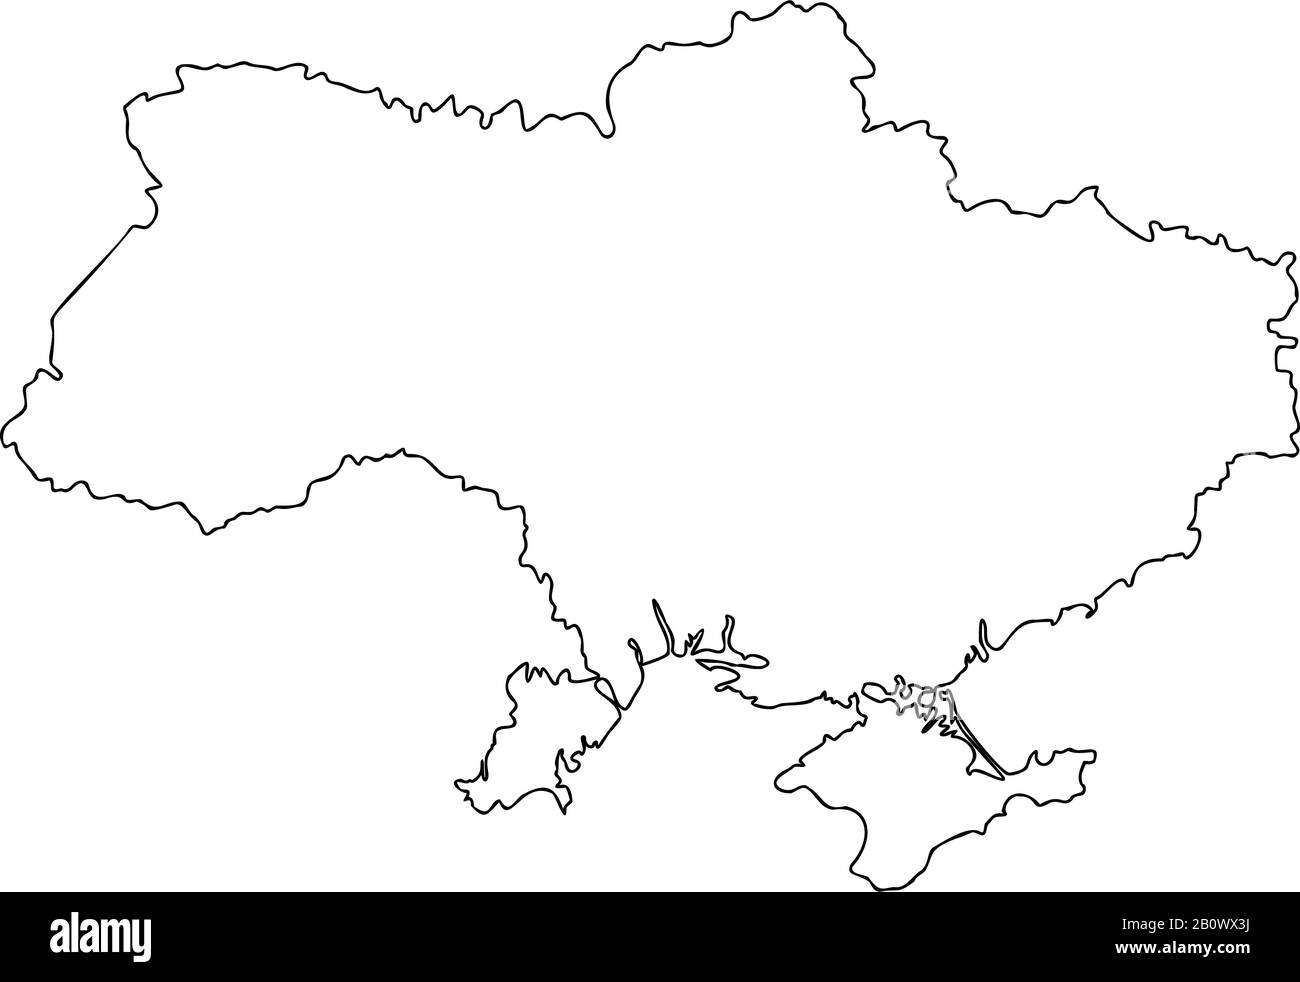 Karte Ukraine Symbol Umriss schwarze Farbe Vektor Illustration flaches Design einfaches Bild Stock Vektor